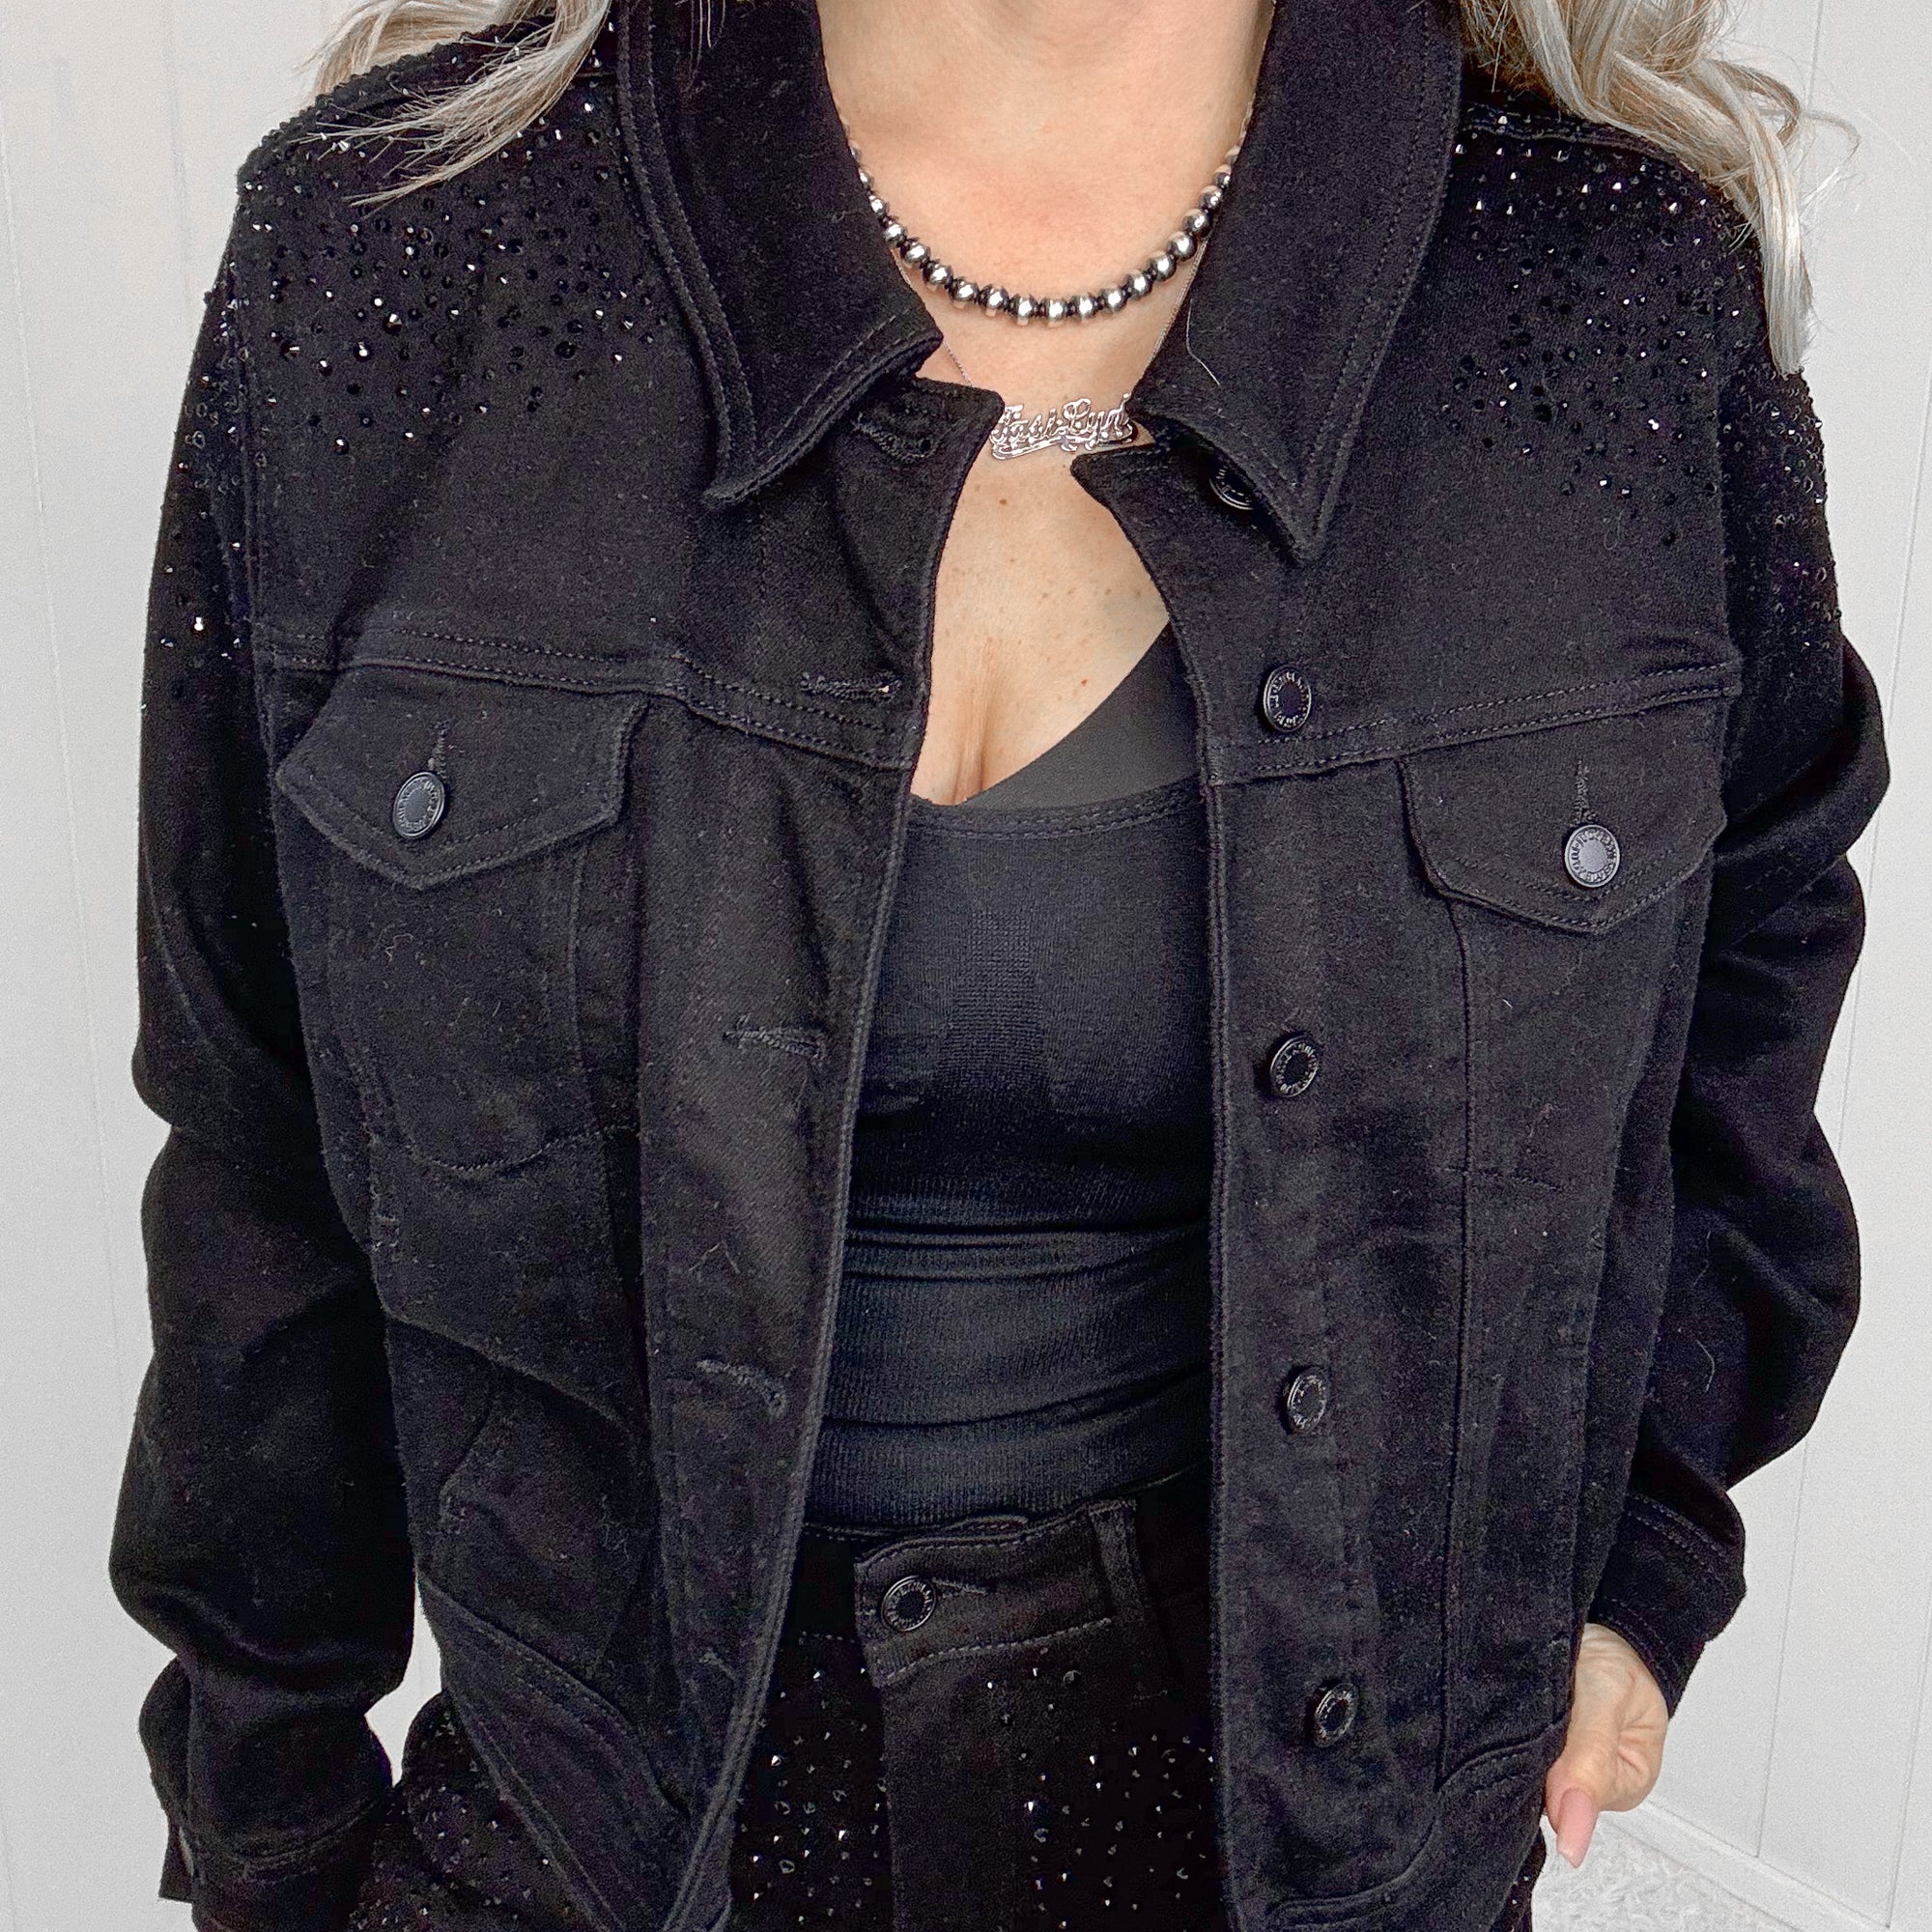 Judy Blue Reese Rhinestone Denim Jacket in Black - Boujee Boutique 